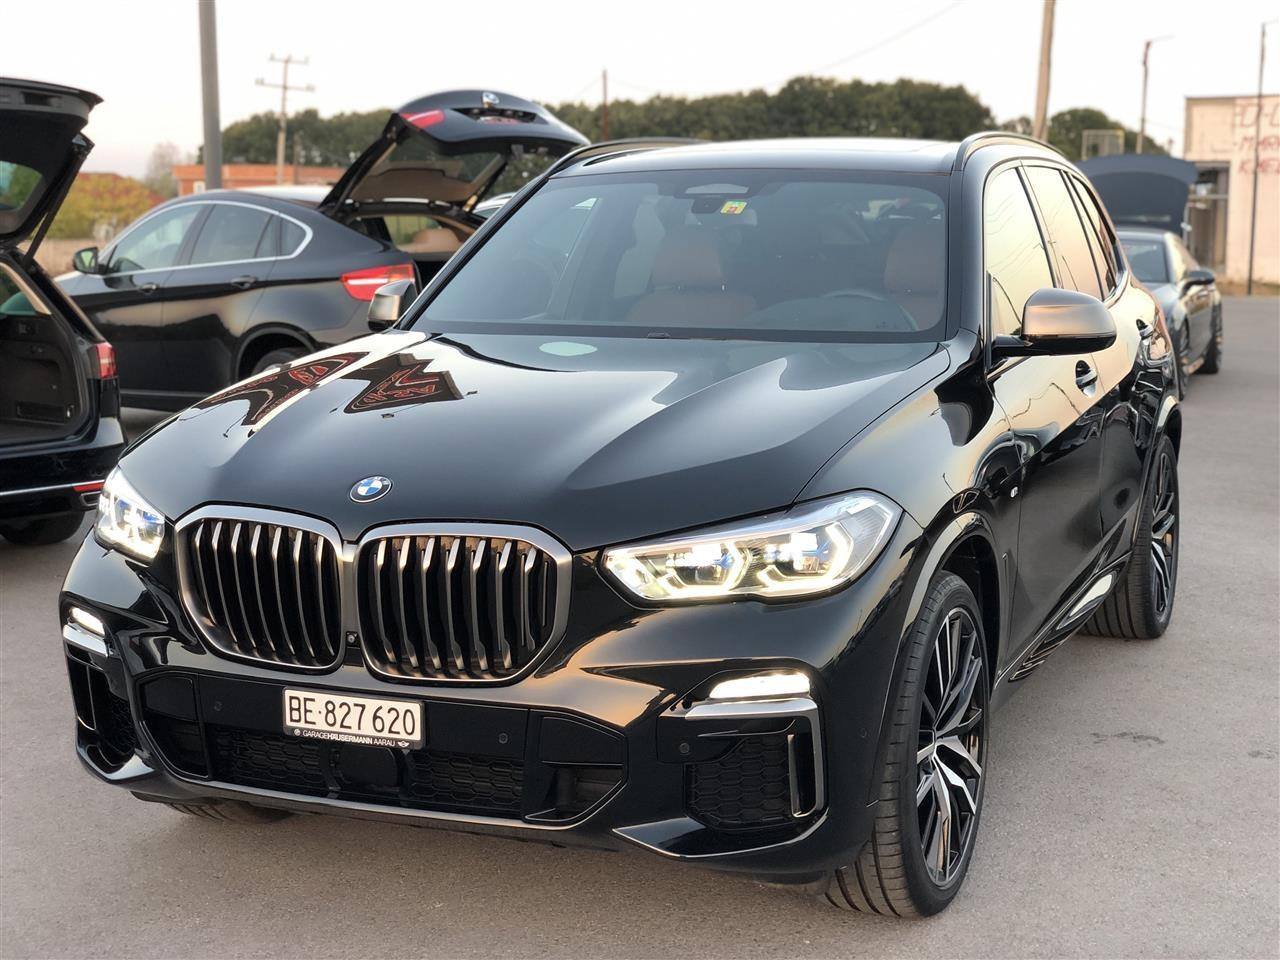 BMW X5 M50d 2019 3.0 Diesel 400 PS 139 mij KM nga Zvicrra 